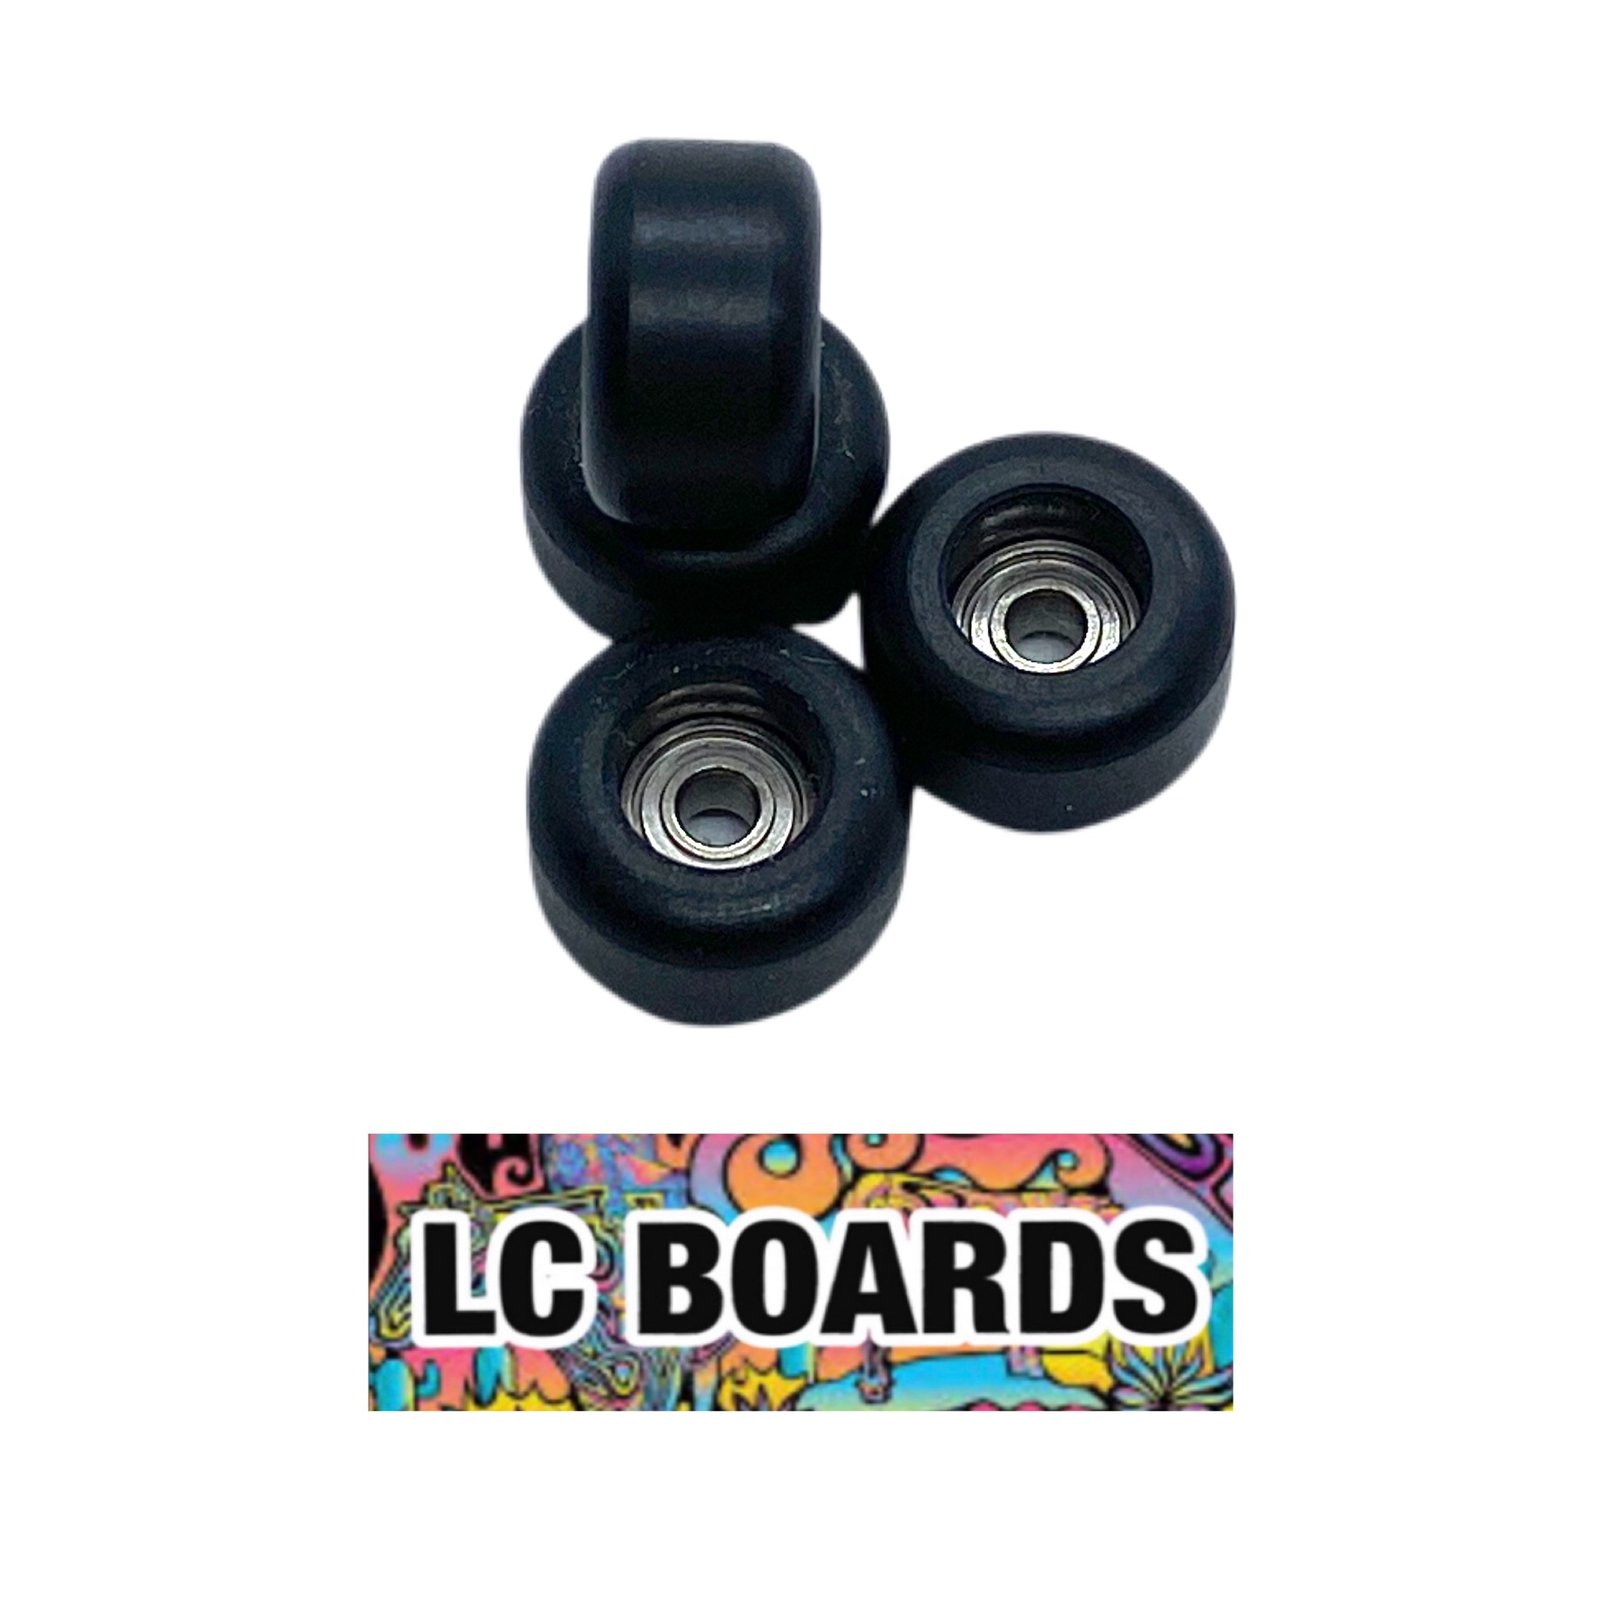 Orange LC BOARDS Fingerboard Wheels Bearing Wheels Brand New High Quality 